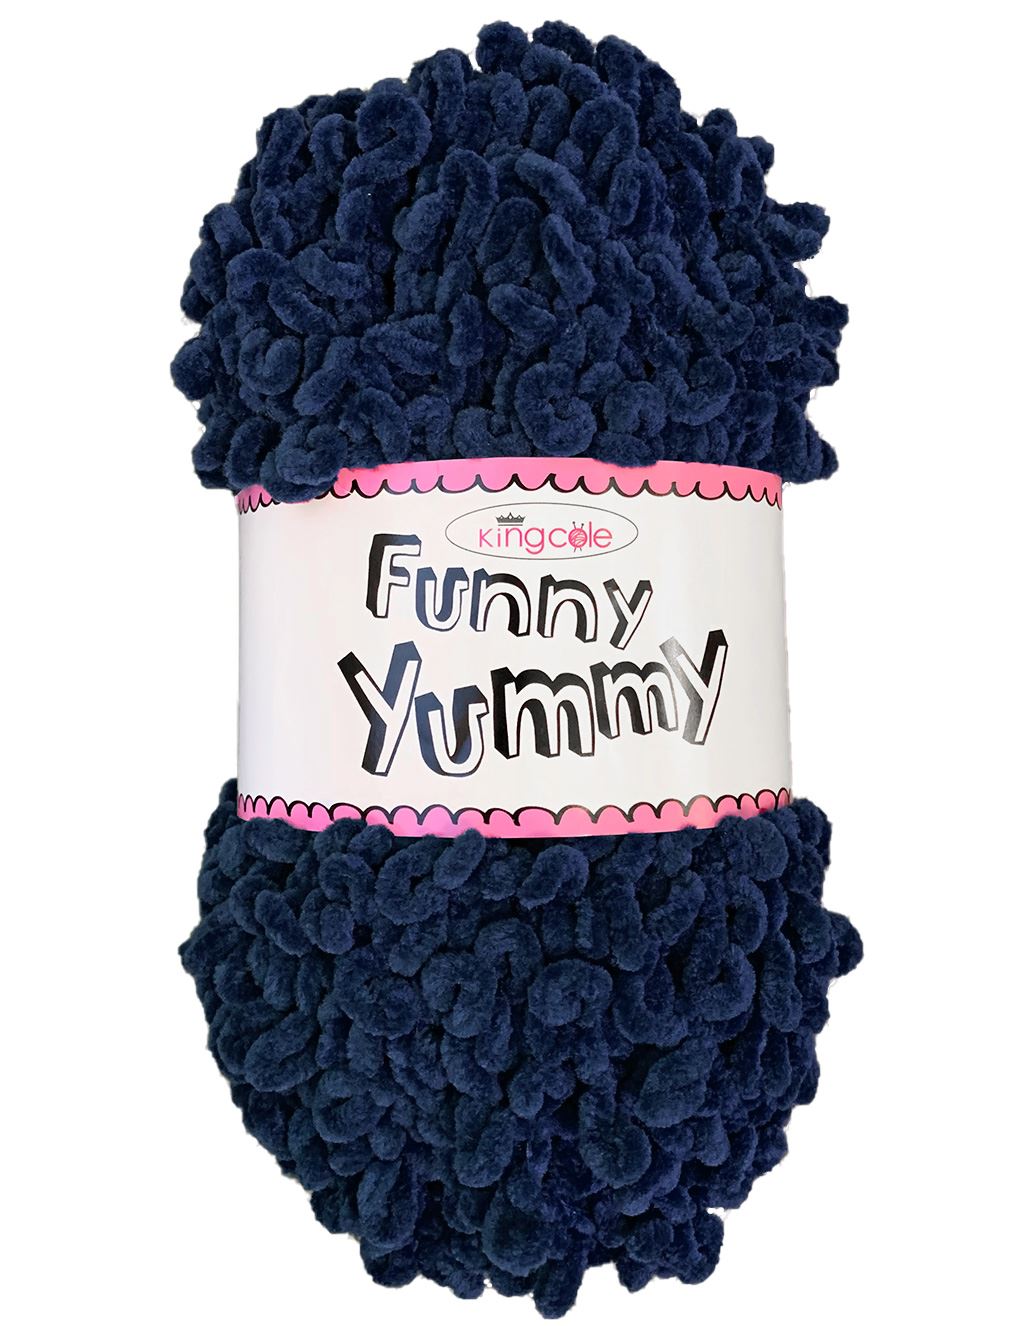 King Cole Funny Yummy Navy (4146) chenille yarn - 100g